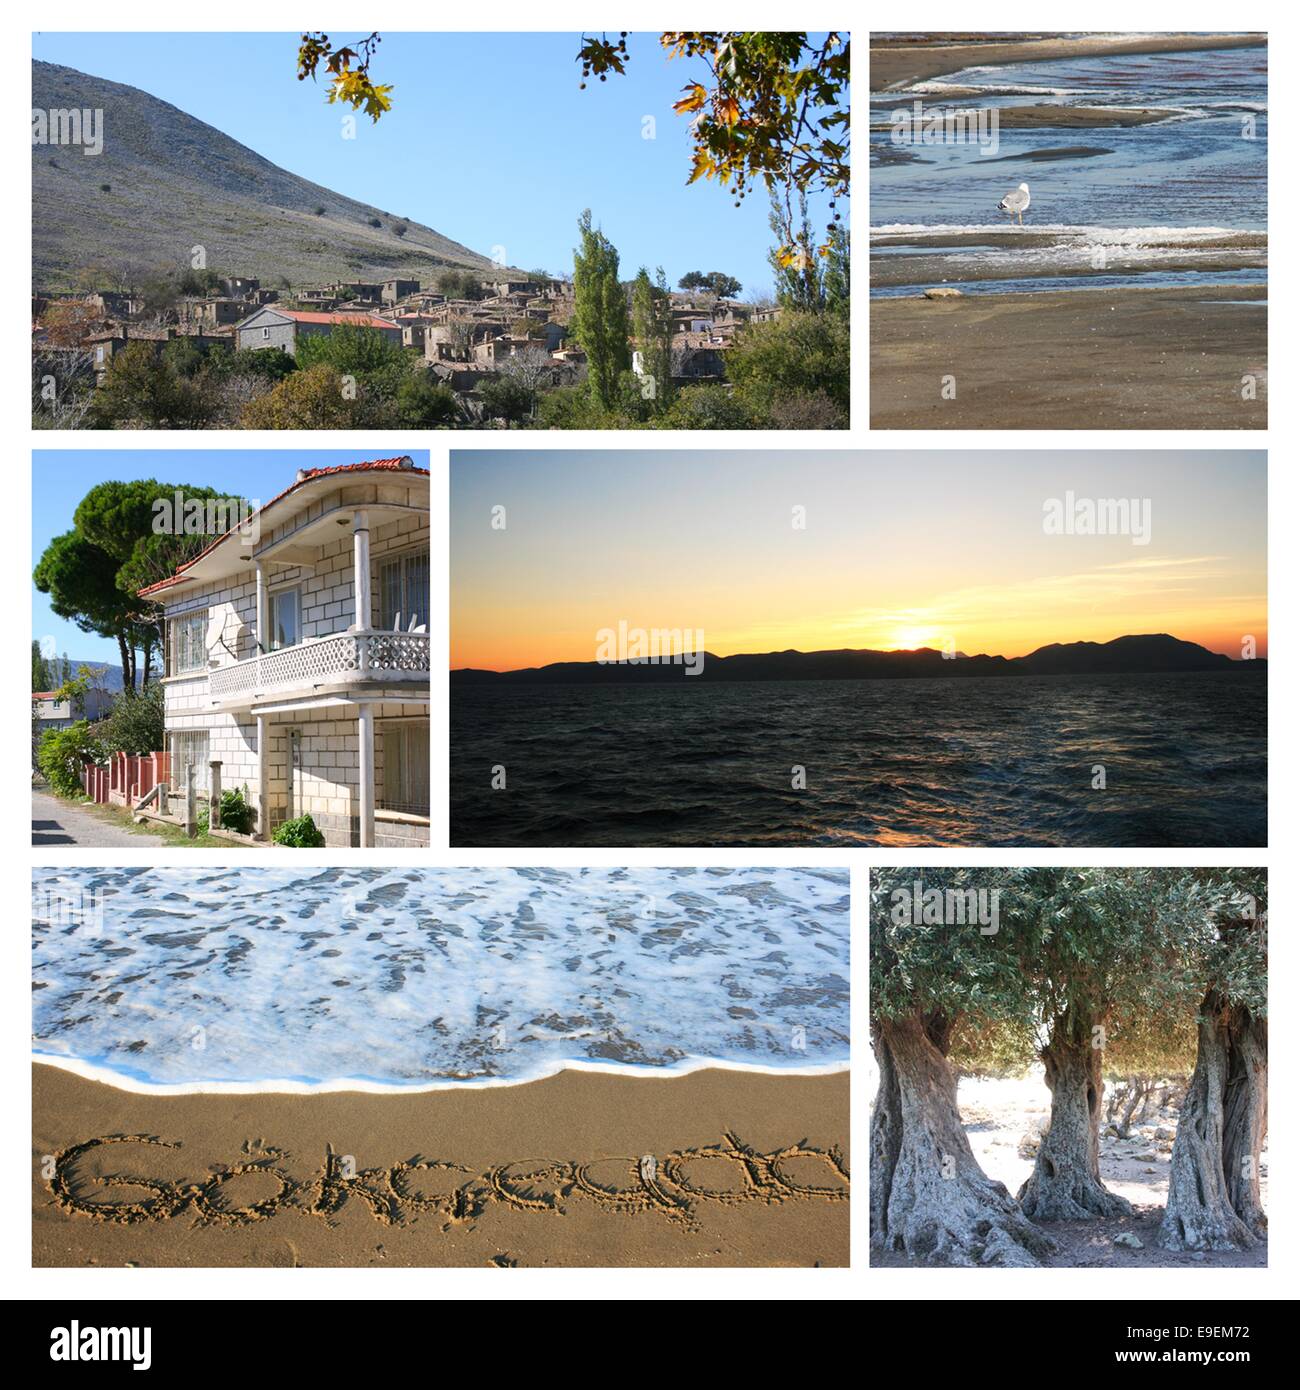 Imbros(Gokceada) Island in Turkey -Collage Stock Photo